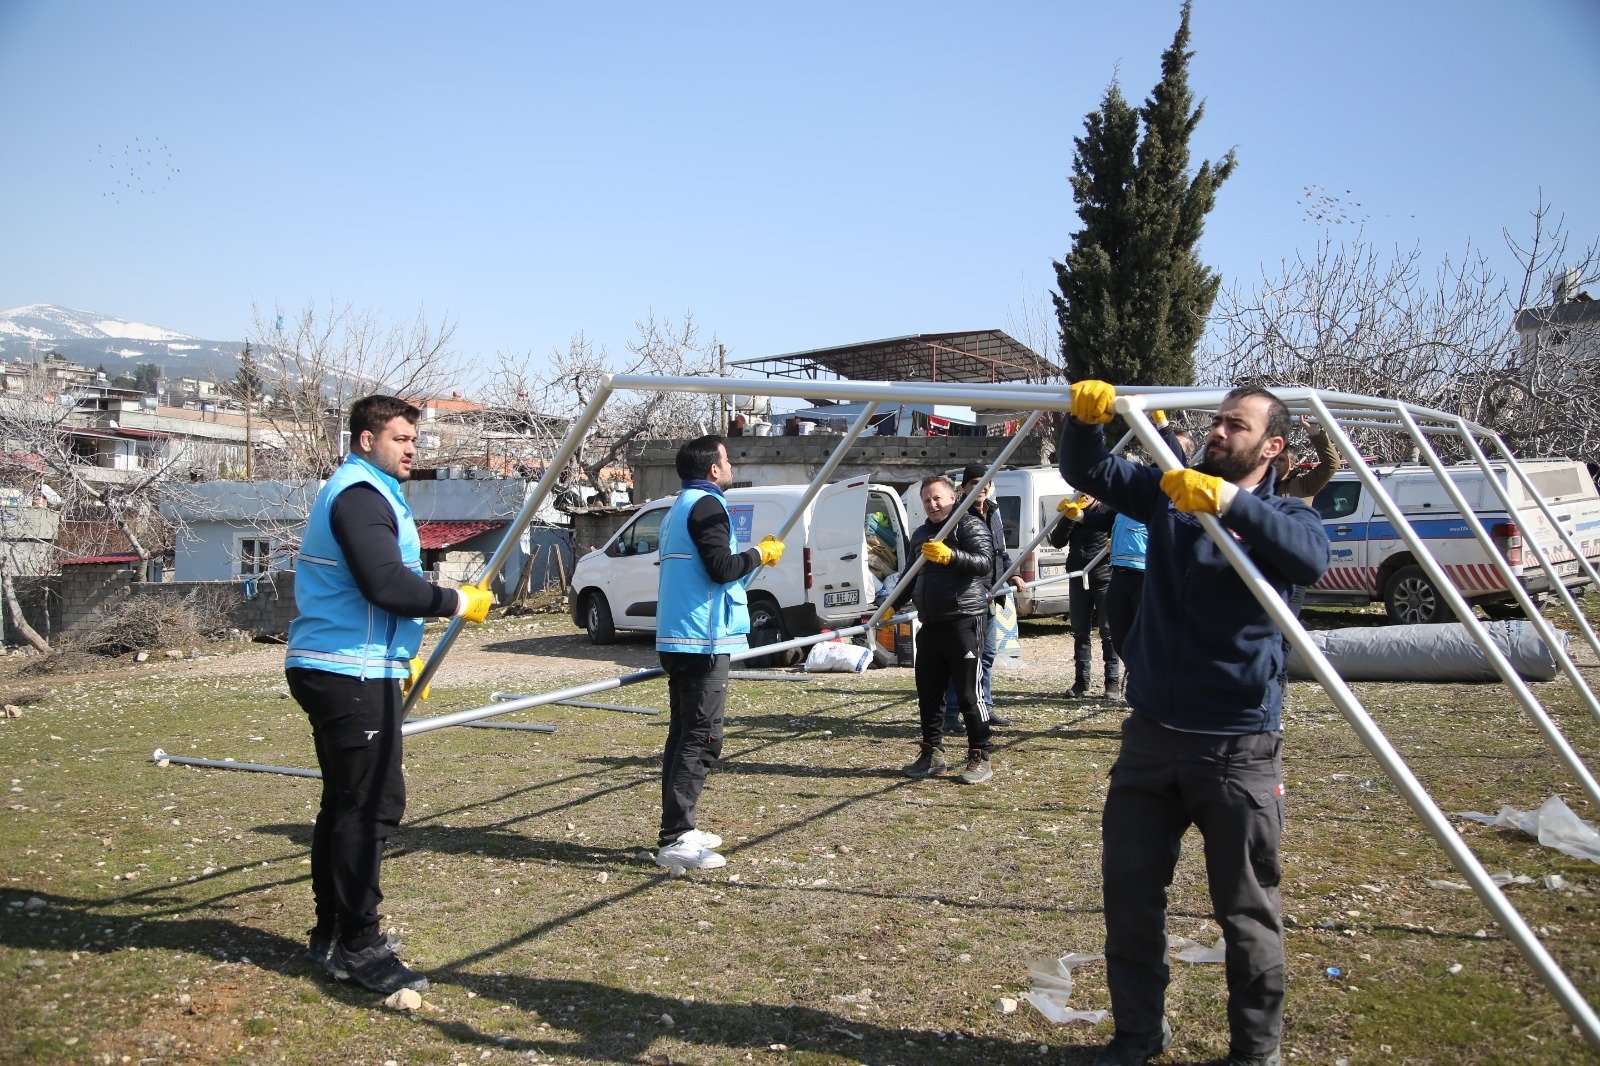 Rıza Kayaalp helping in setting up a tent for the earthquake victims, Kahramanmaraş, Türkiye, Feb. 13, 2023. (AA Photo)